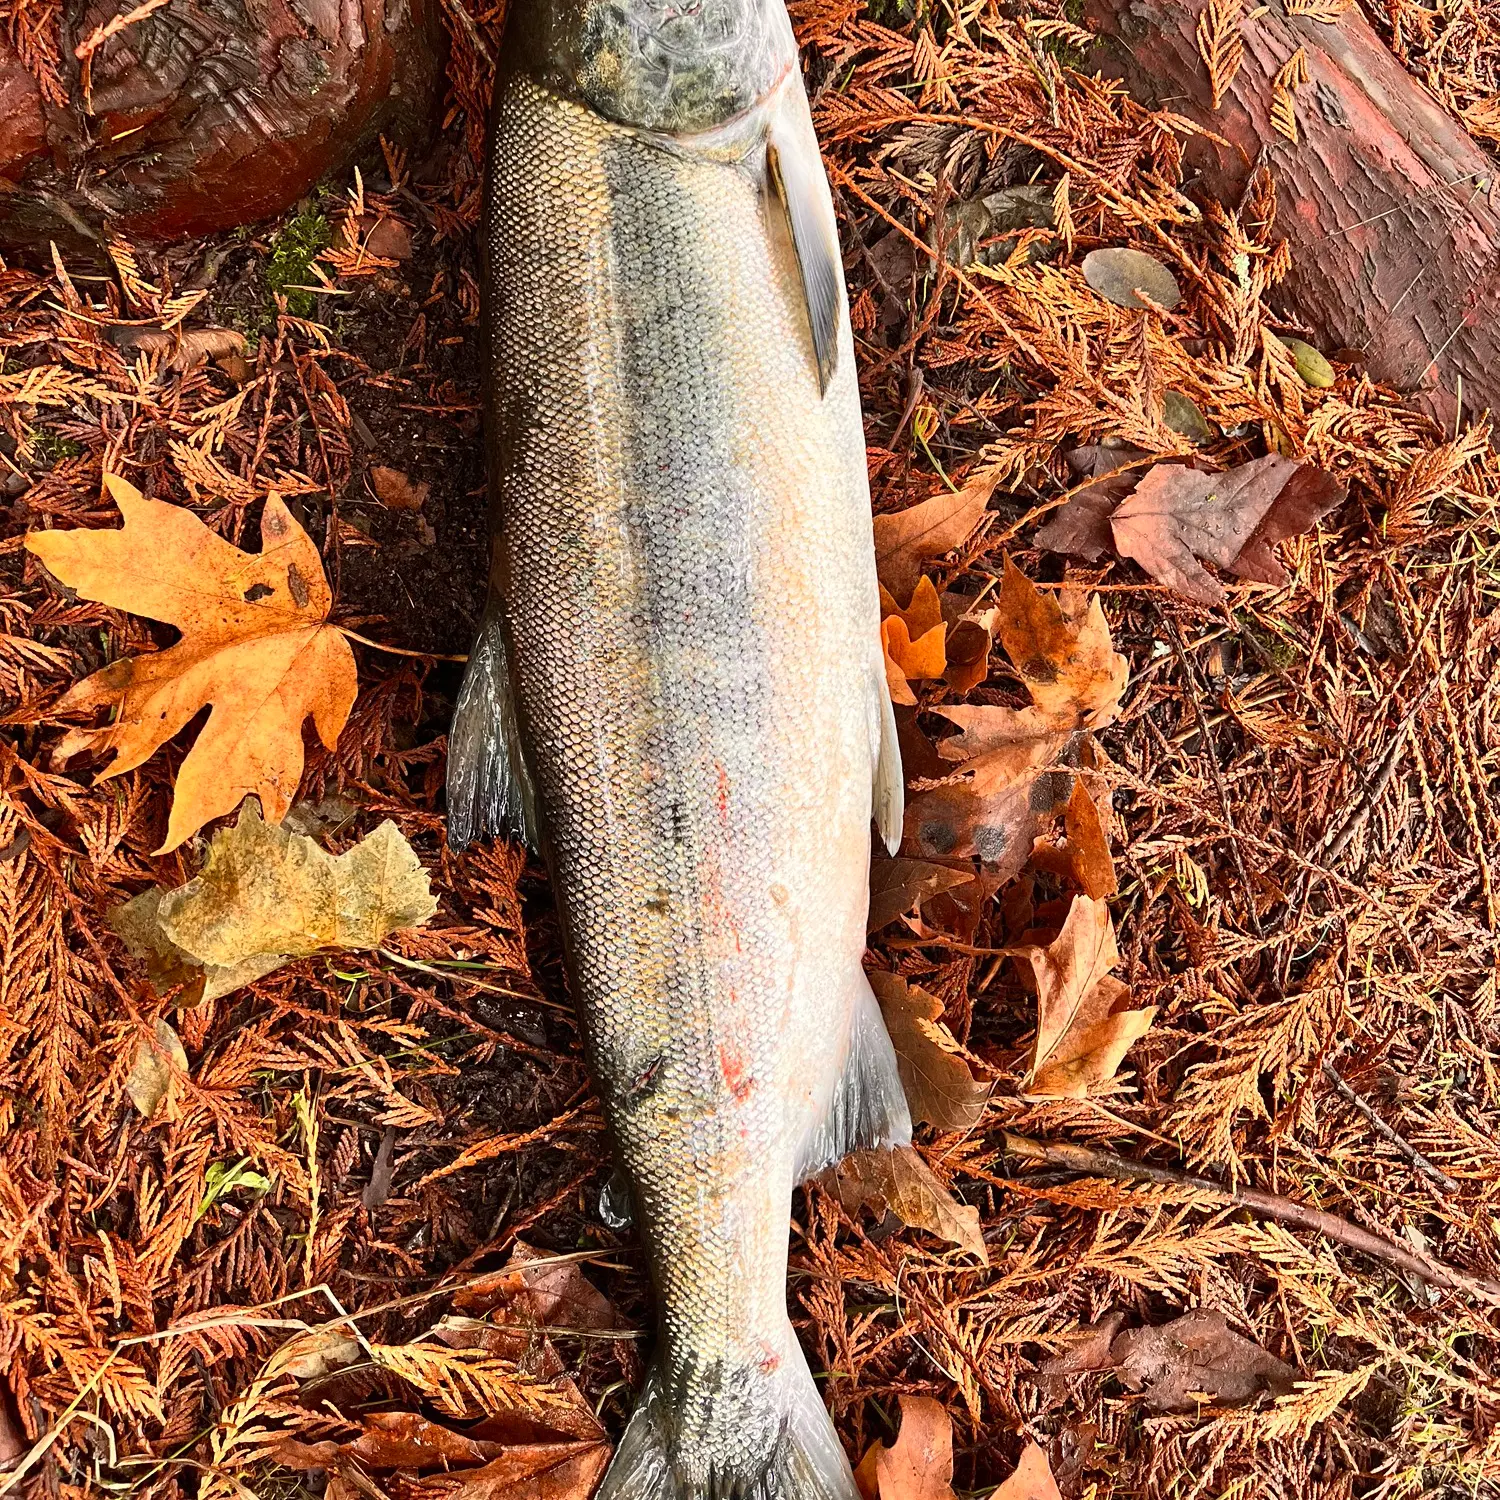 18+ Minter Creek Fish Hatchery